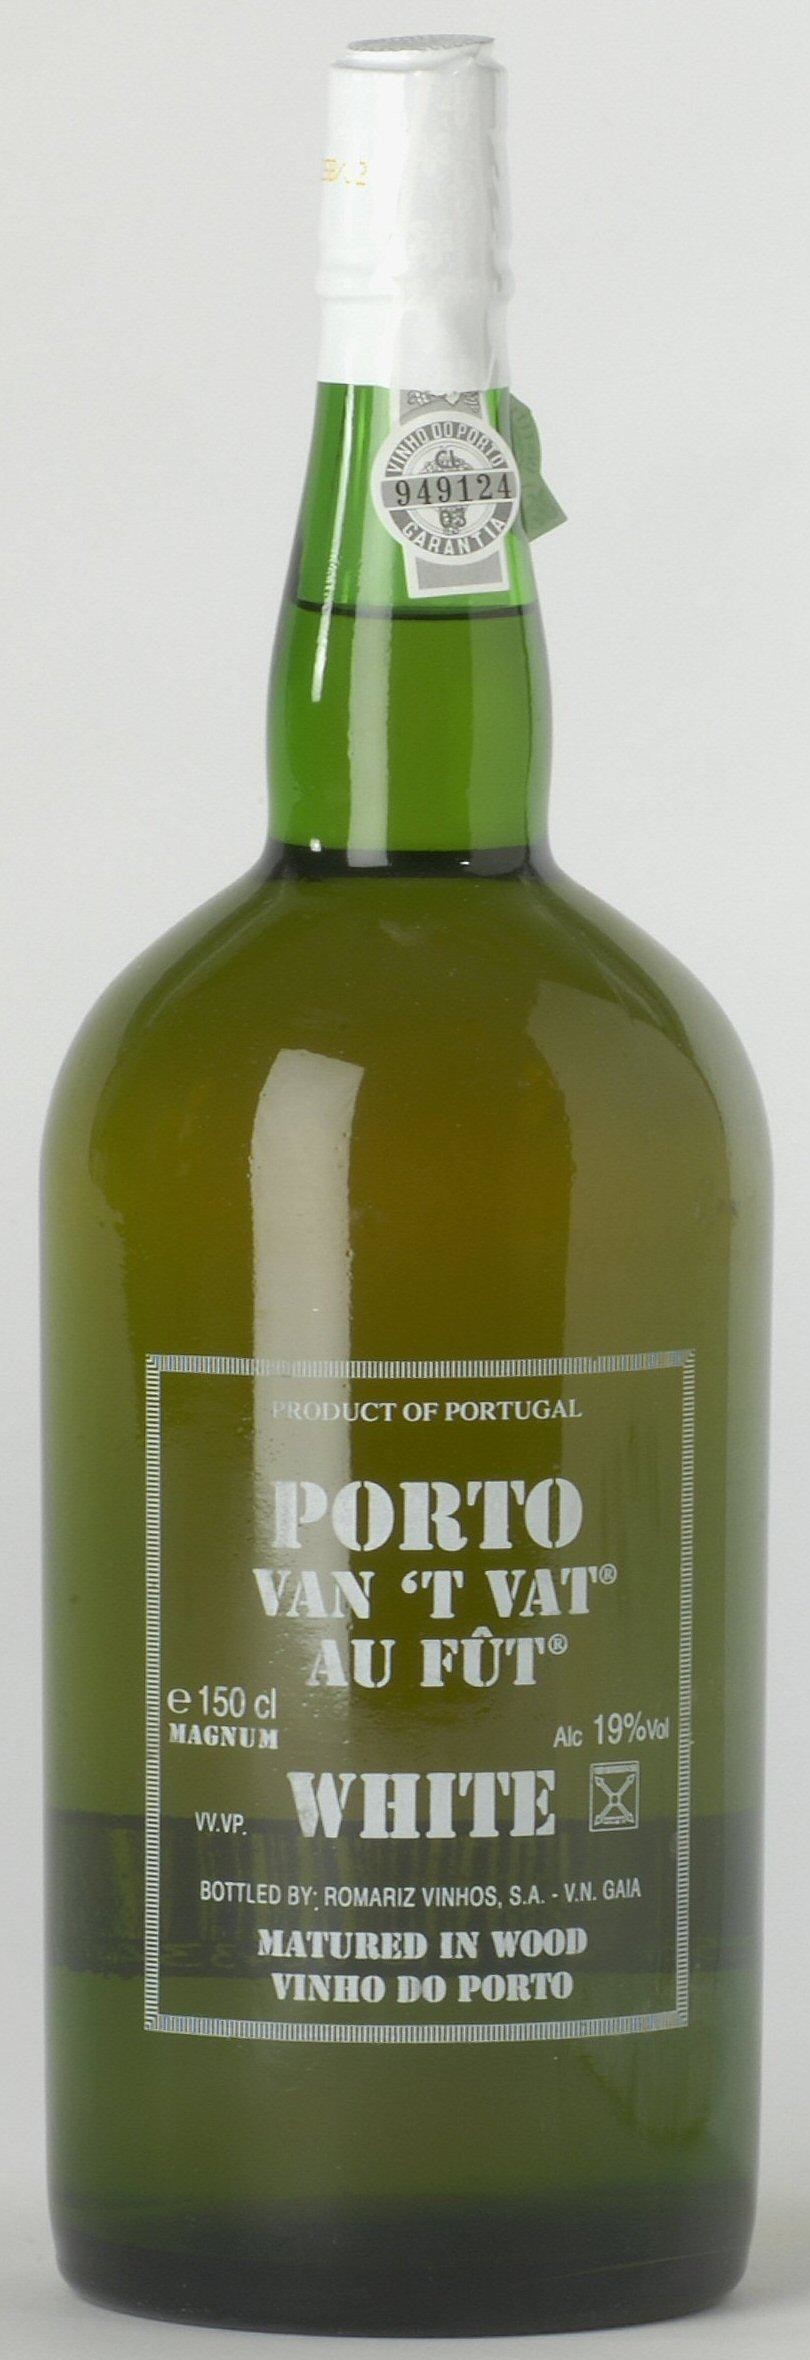 Porto au fut blanc 1.5L 19%